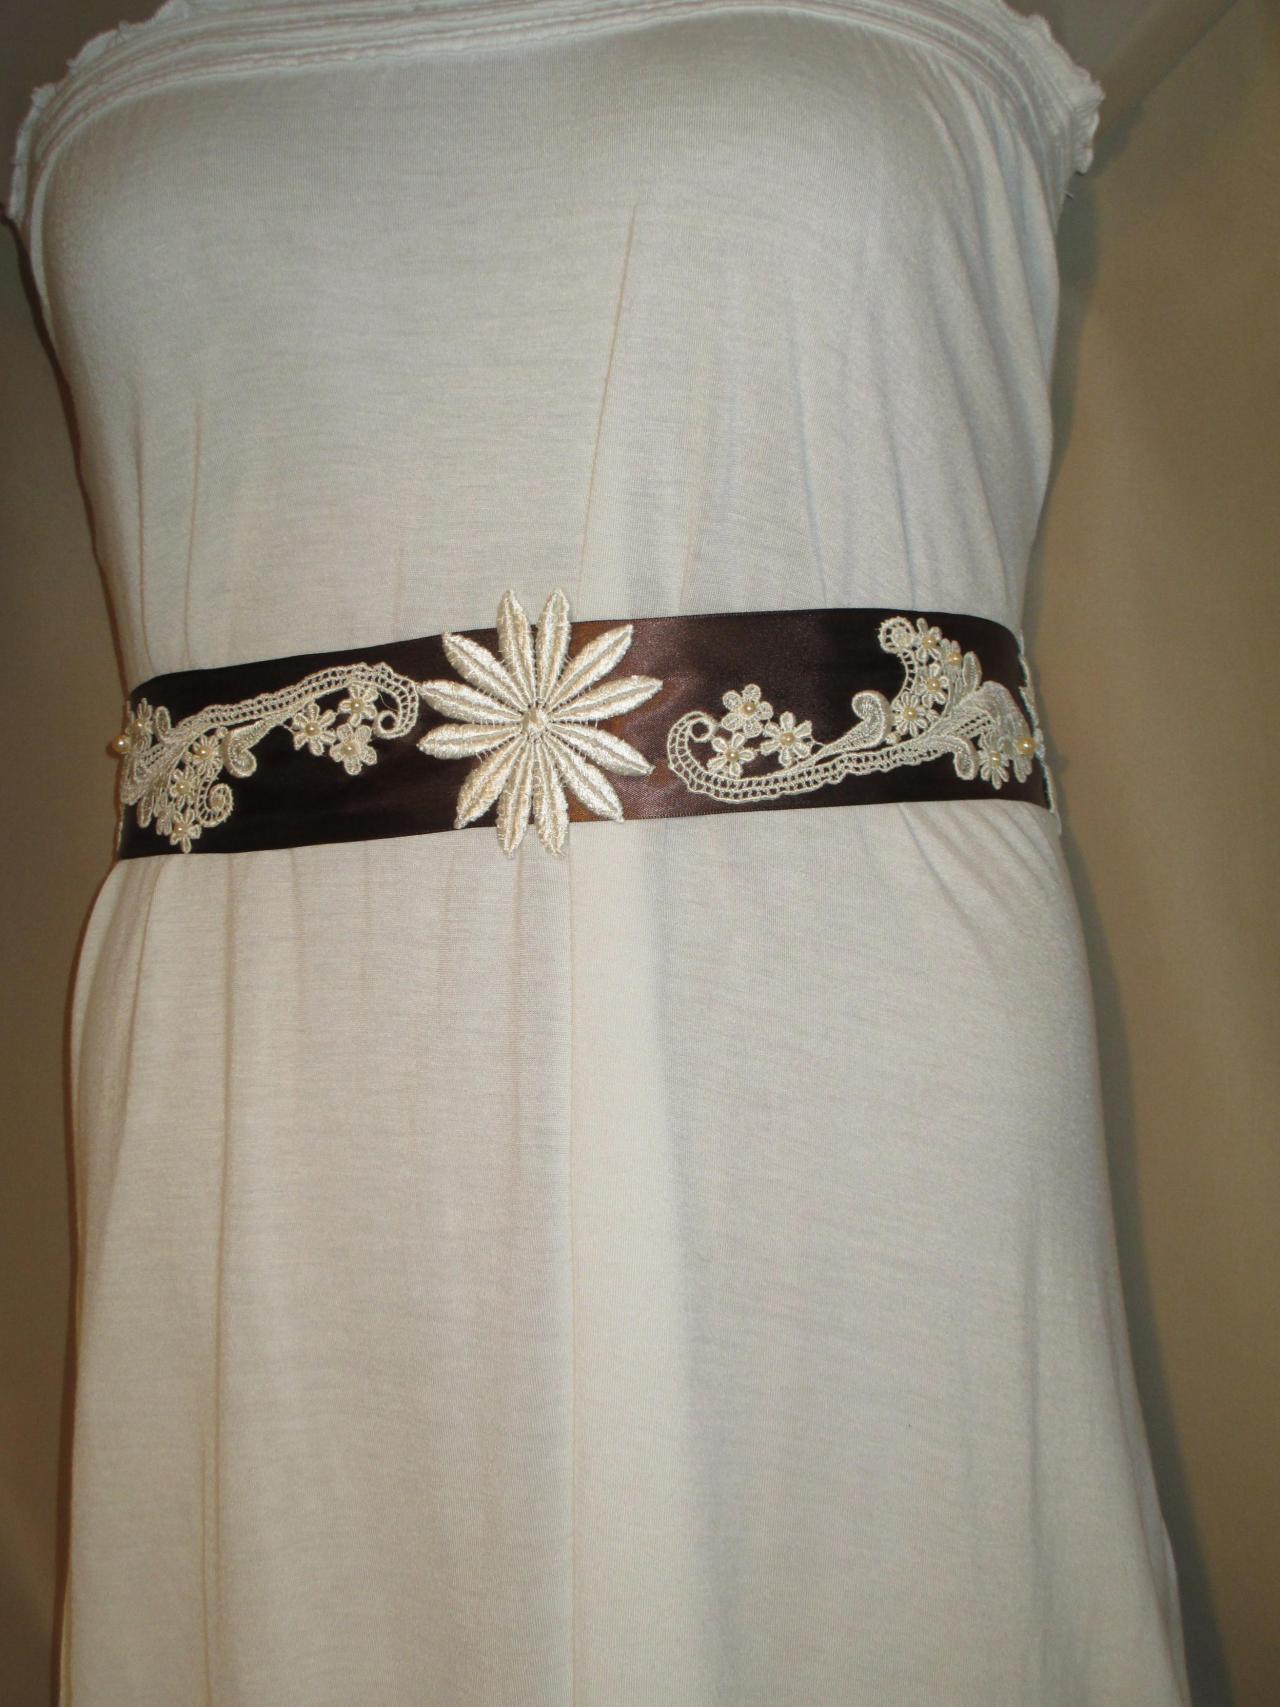 Bridal Sash - Wedding Sash - Brown Ribbon - Flower Appliques - Ivory Lace - Ivory Beads -dress Sash - Handmade In Colorado